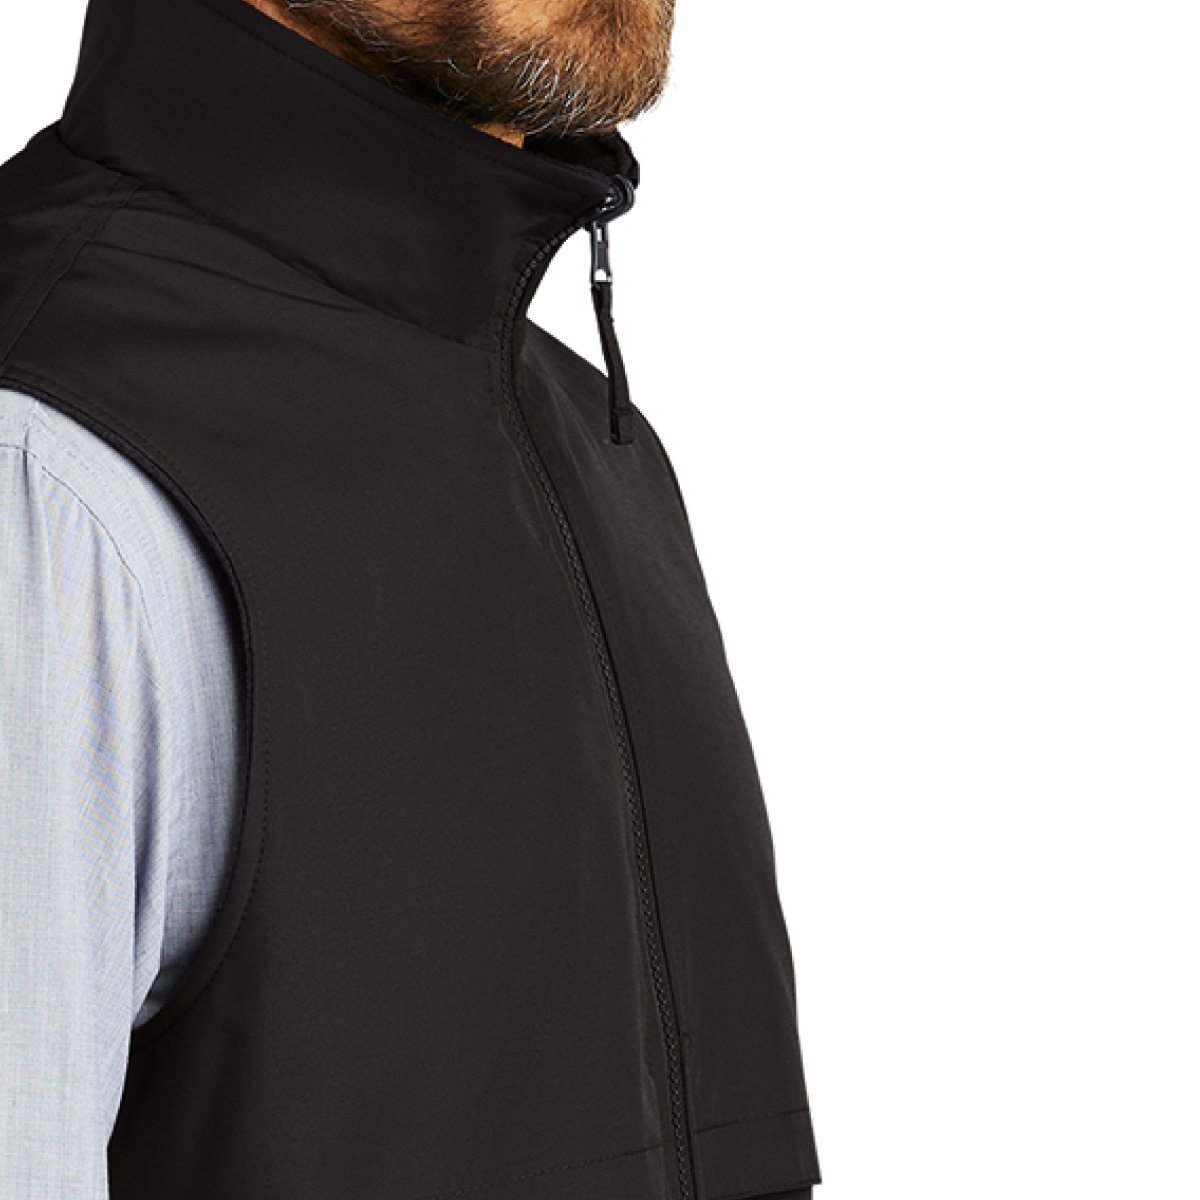 Port Authority ポートオーソリティ Reversible Charger Vest (品番J7490US)